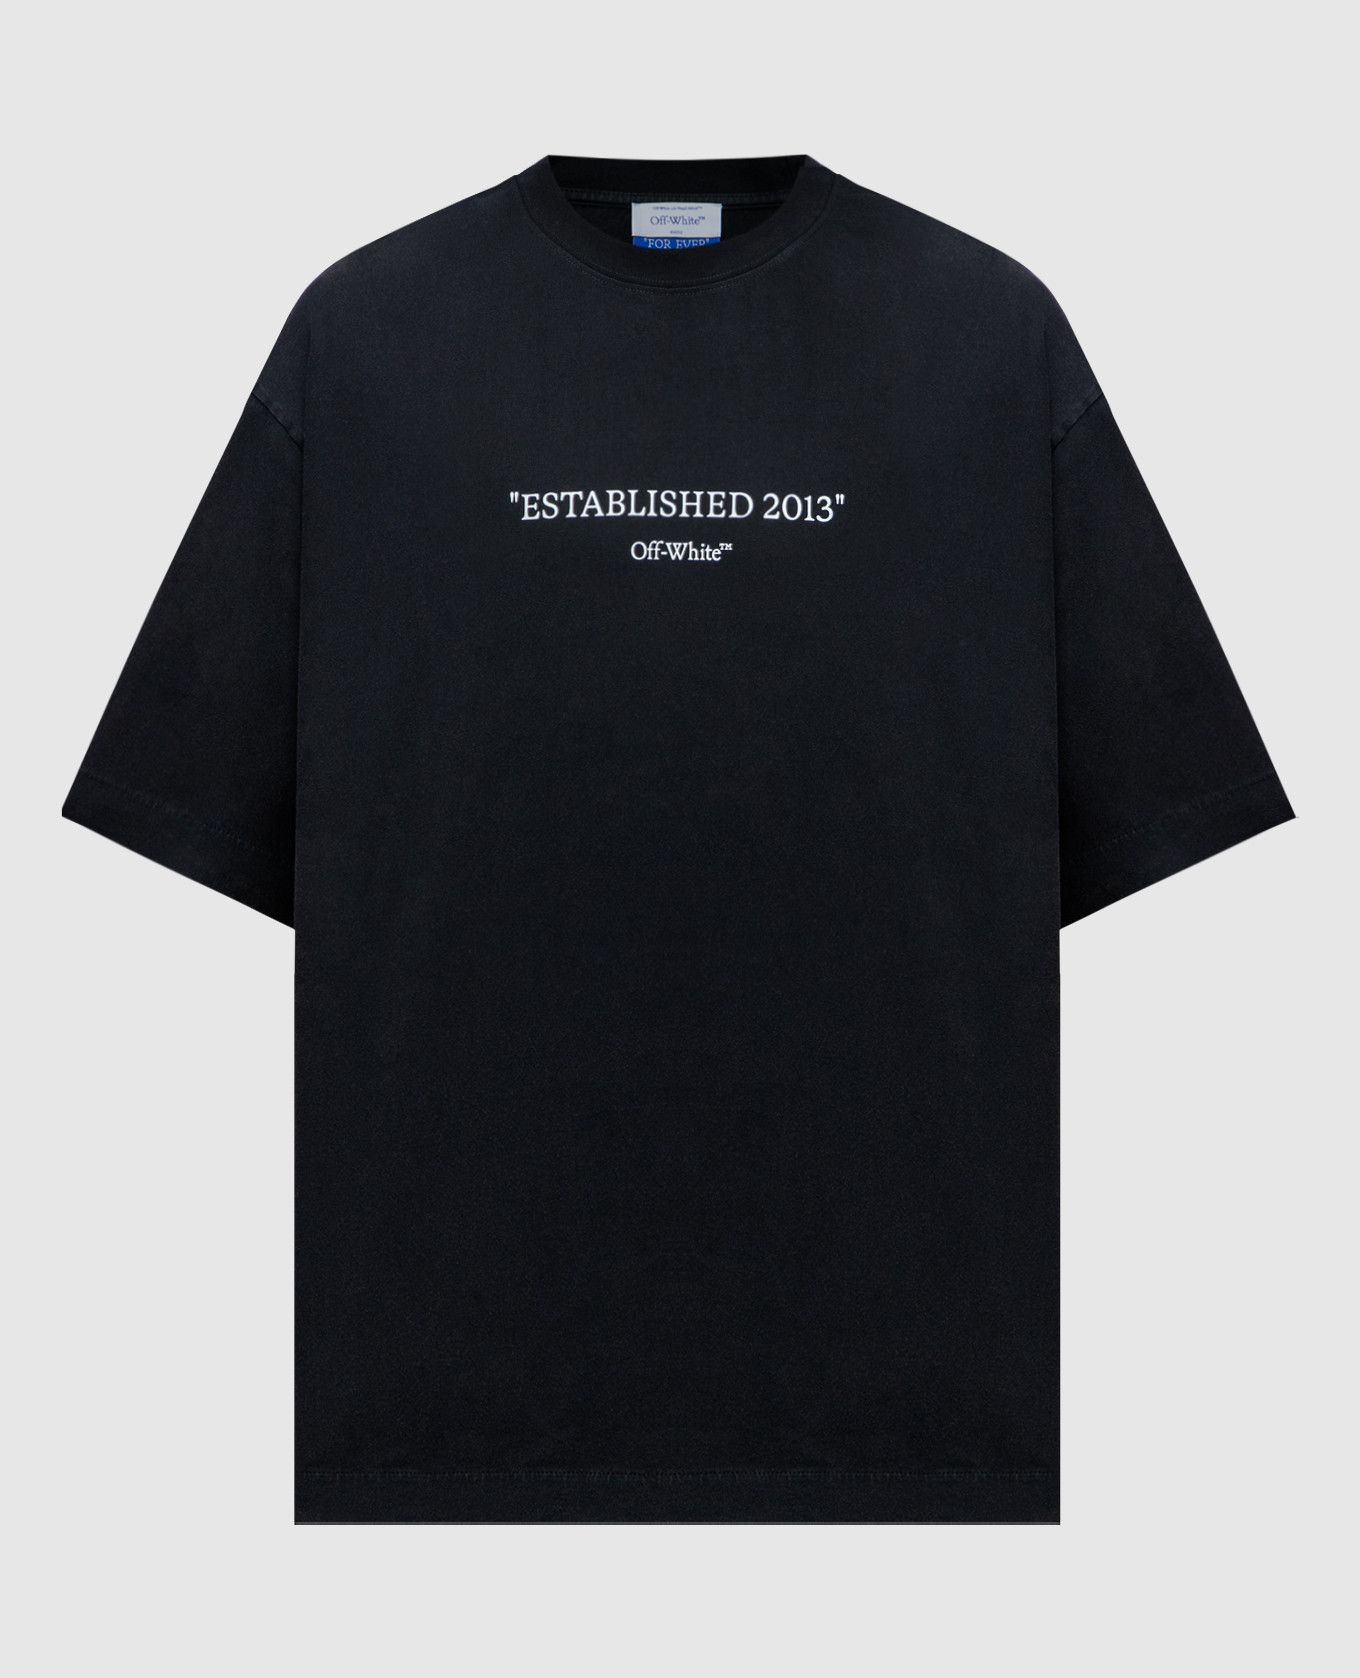 Black t-shirt with a print